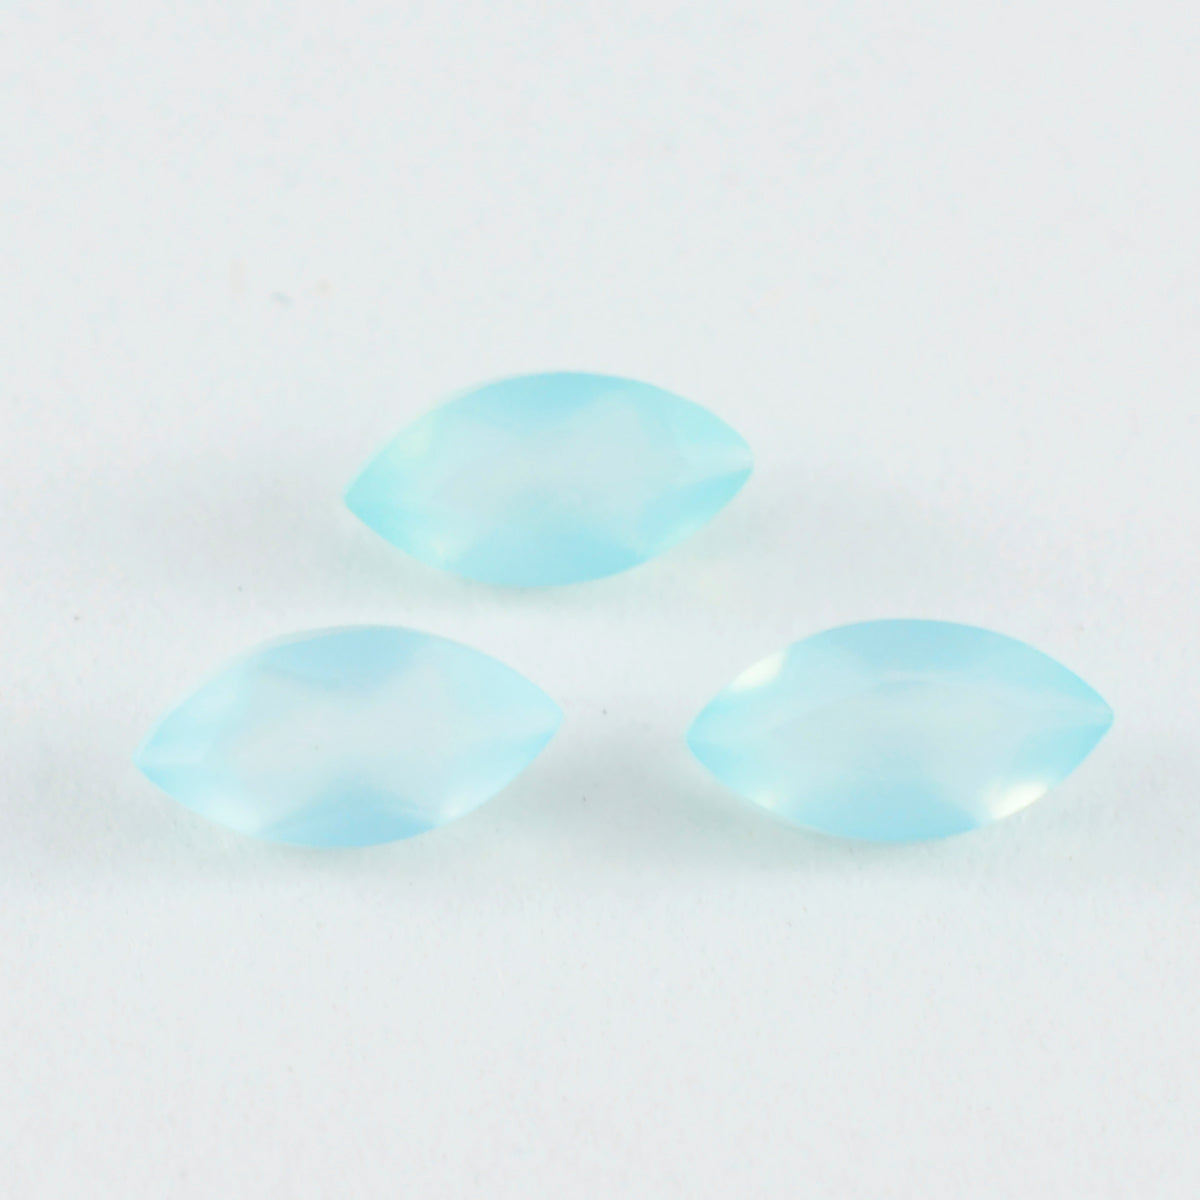 Riyogems 1PC Genuine Aqua Chalcedony Faceted 9x18 mm Marquise Shape Good Quality Gemstone